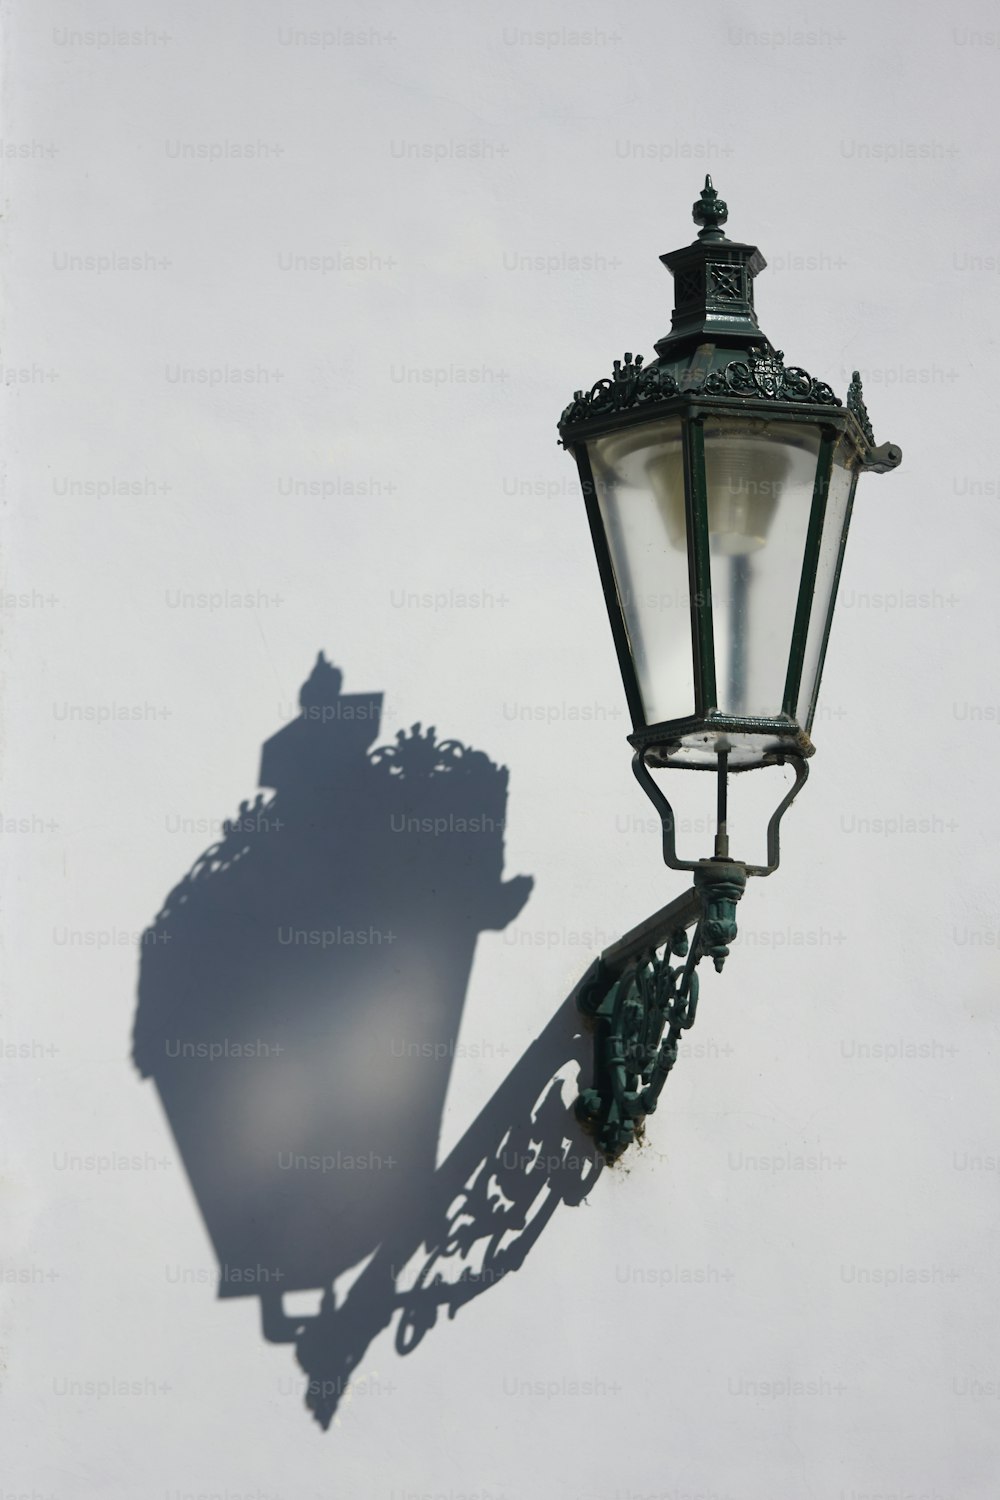 a street light casting a shadow on a wall